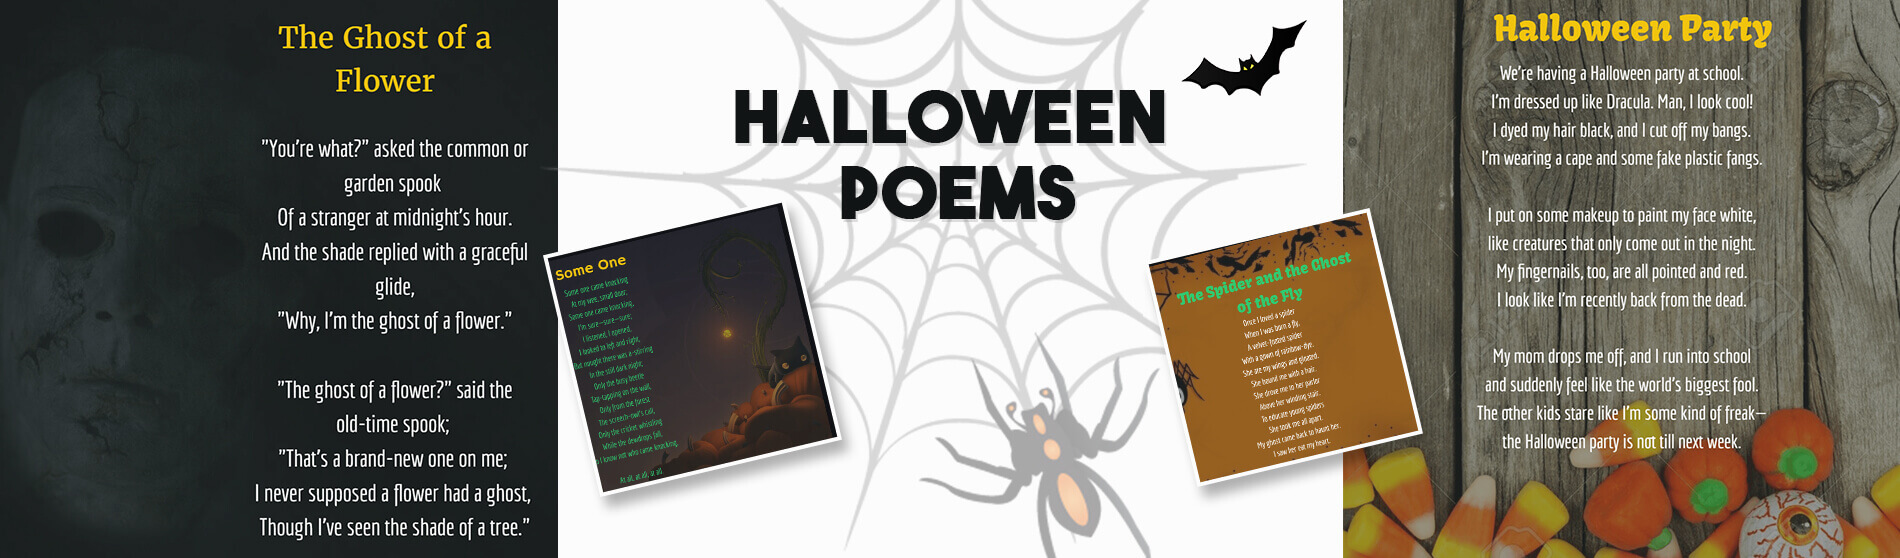 Glendale Halloween : Halloween-poems